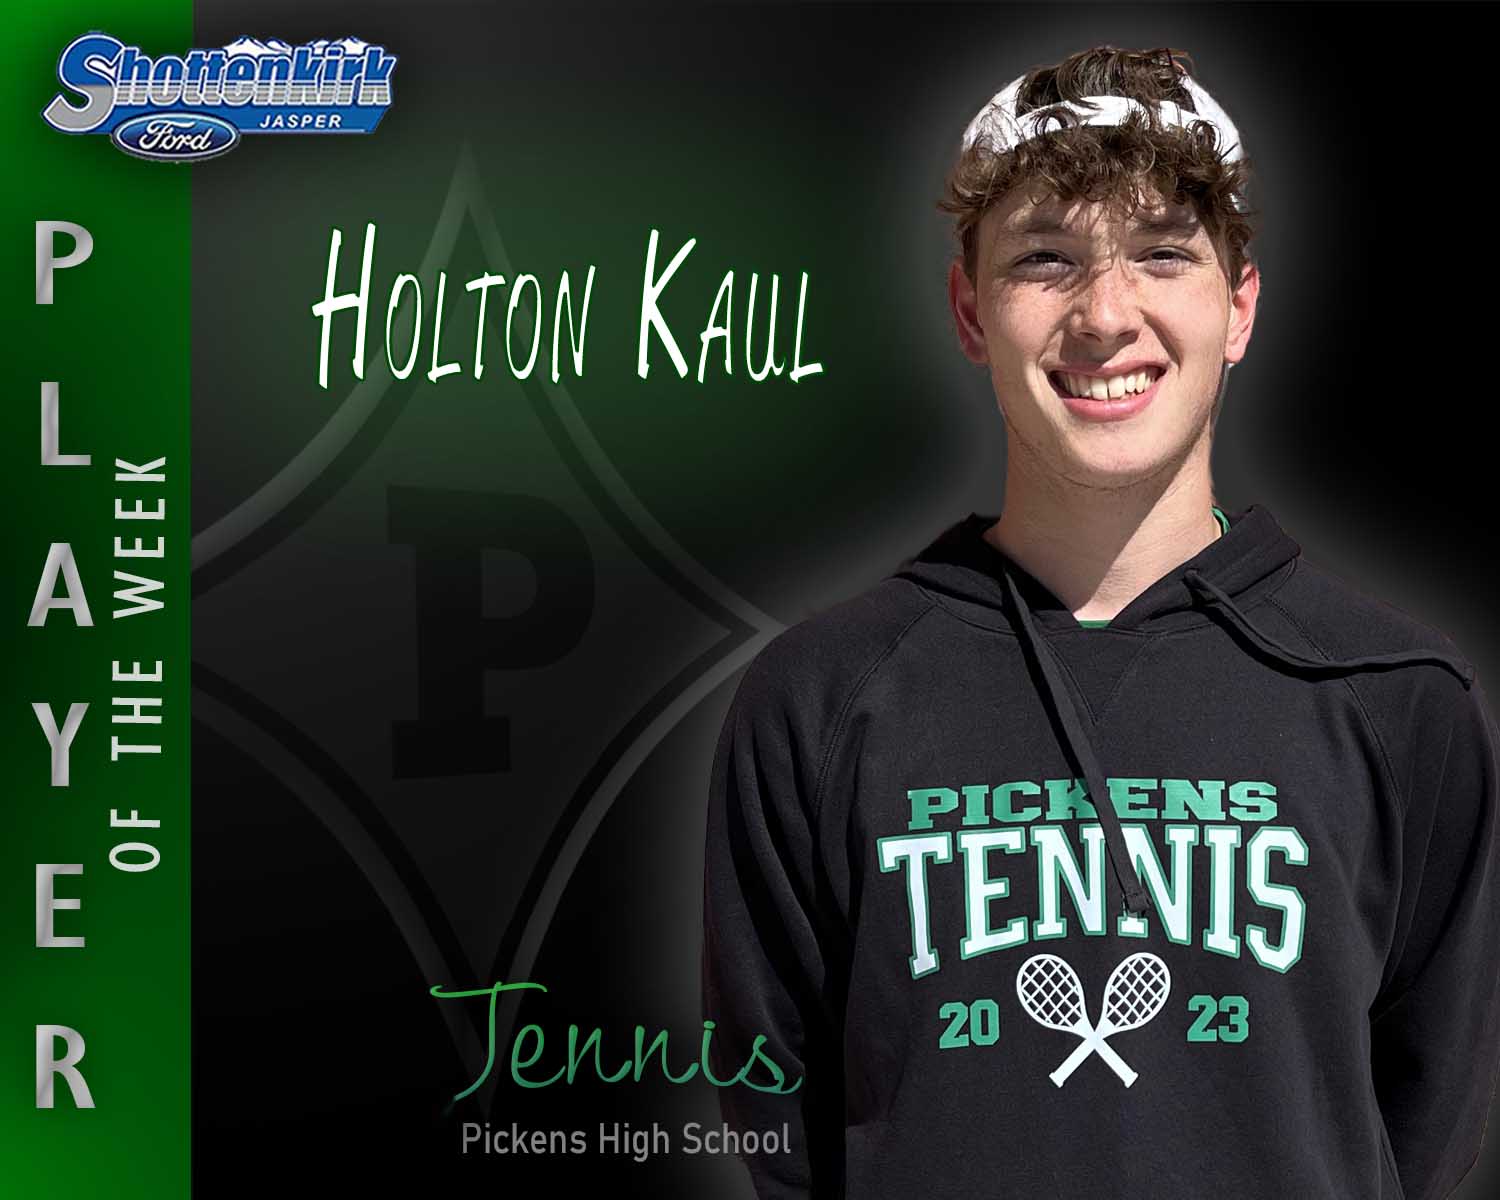 PHS Boys Tennis Player of the Week #3 - JHolton Kaul